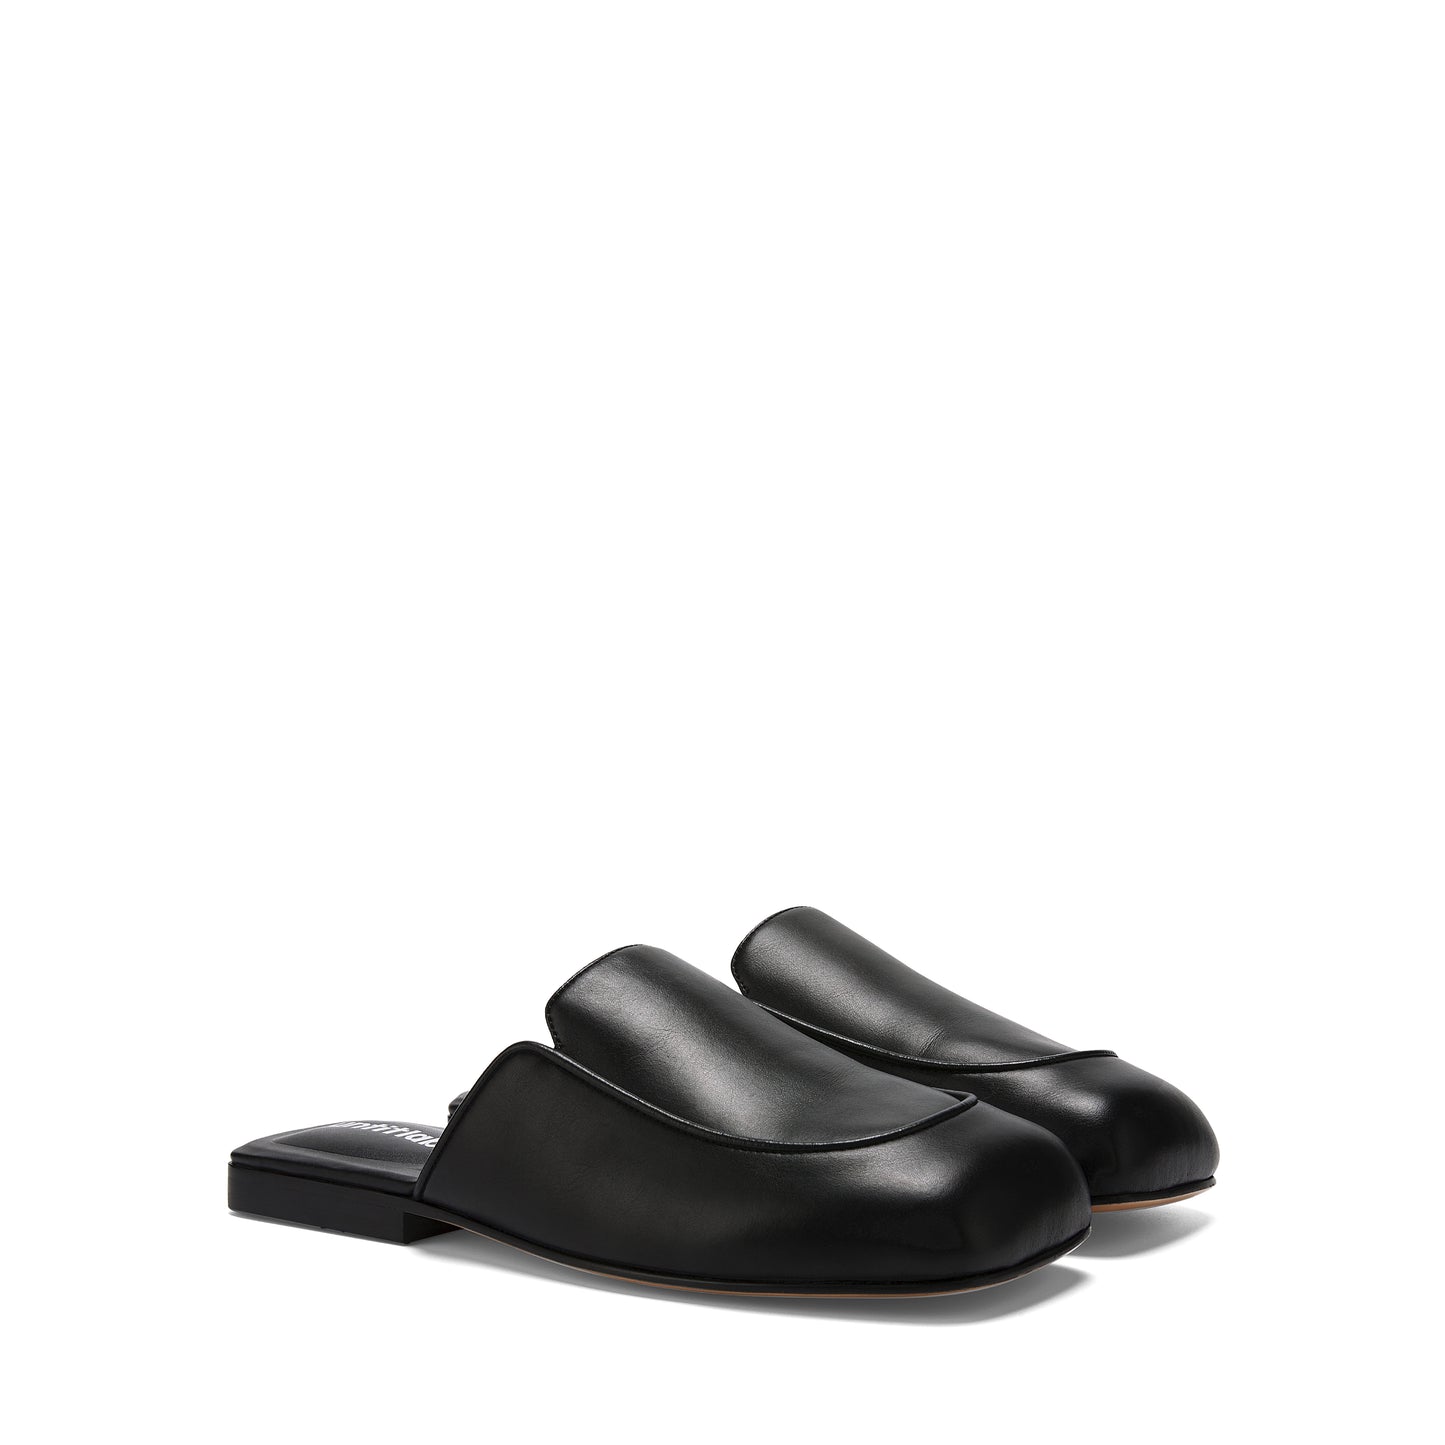 untitled#15 Reel Sandals (Full Black)